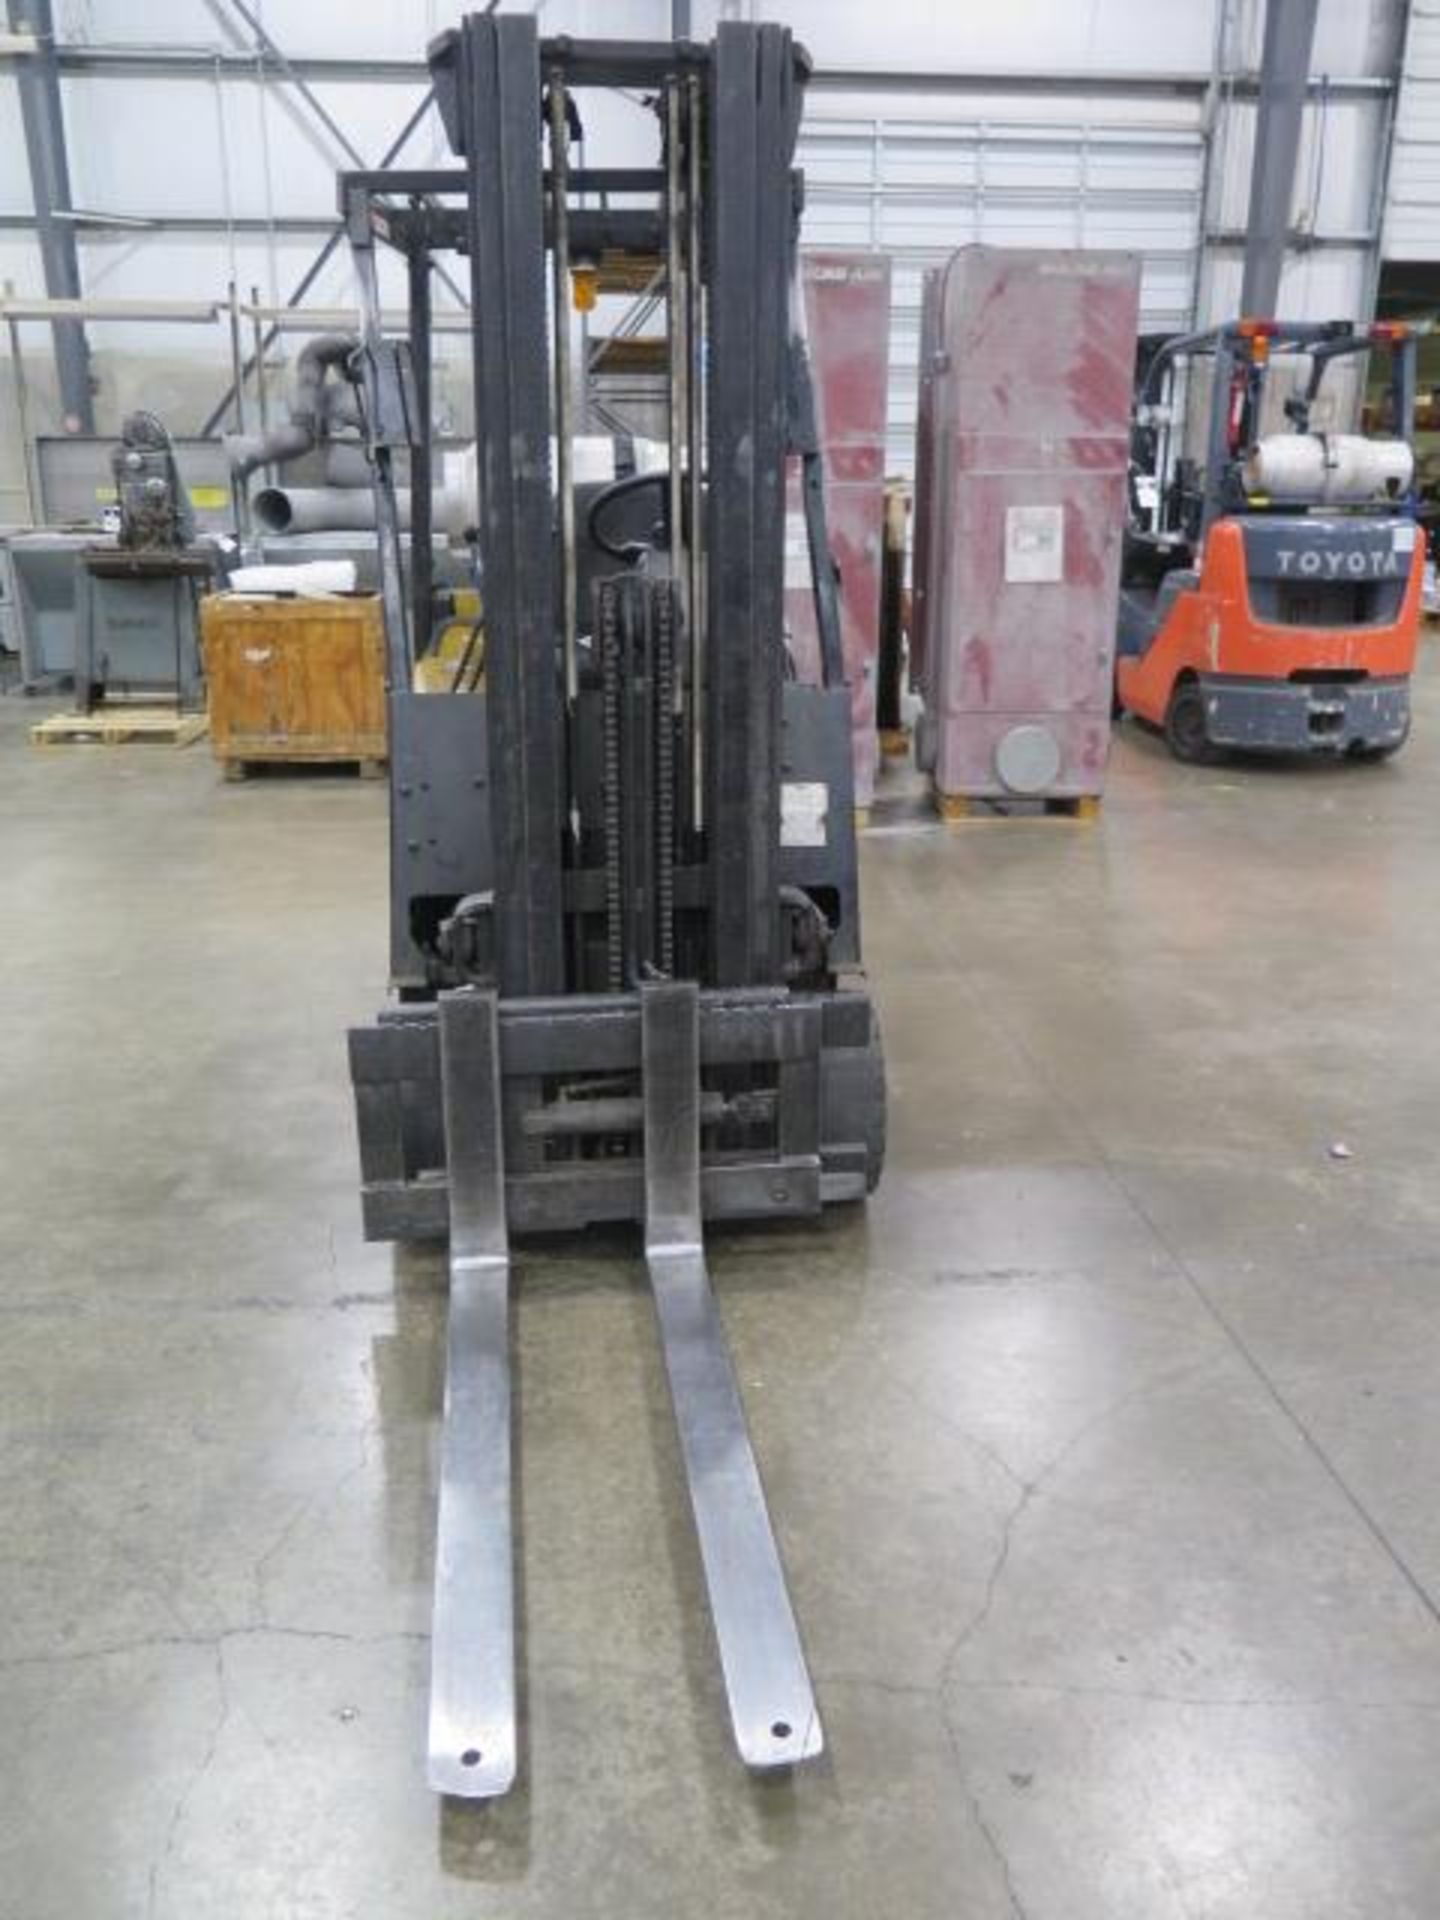 Yale GLC030CENUAE083 3000 Lb LPG Forklift s/n N542835 w/ 3-Stage Mast, 190” Lift Height, SOLD AS IS - Image 4 of 11